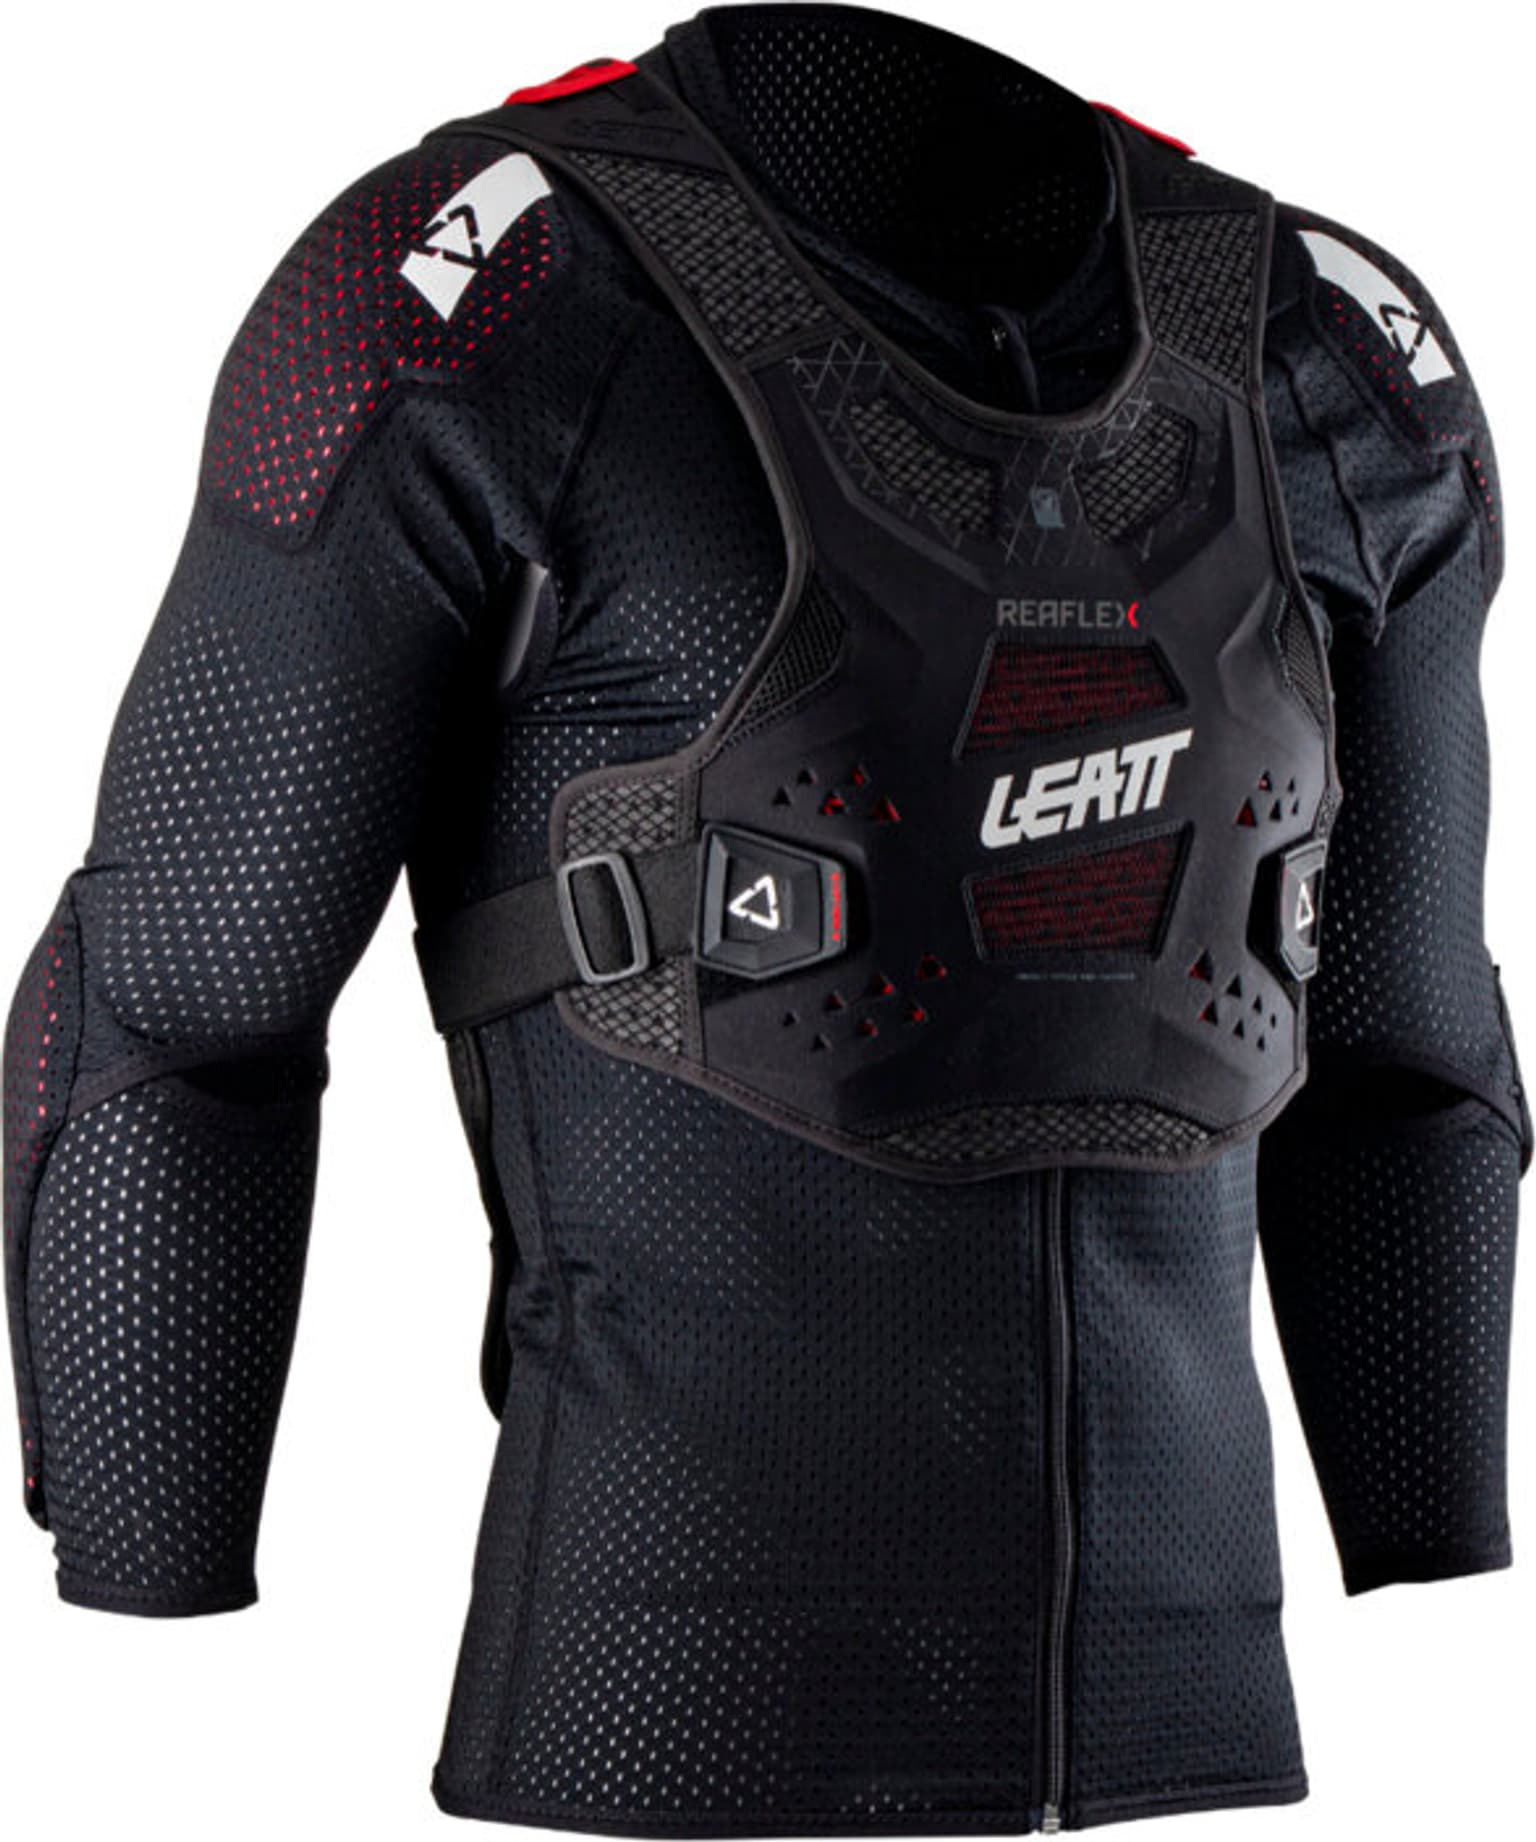 Leatt Leatt ReaFlex Body Protector Protektoren noir 1